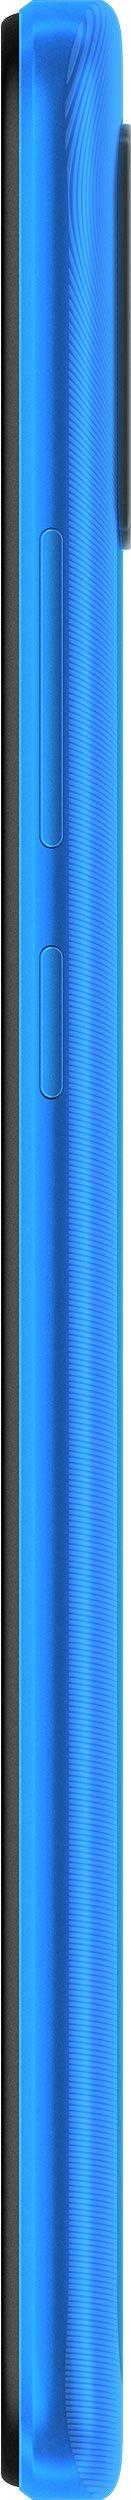 Смартфон Xiaomi Redmi 9A 2/32Gb Blue заказать